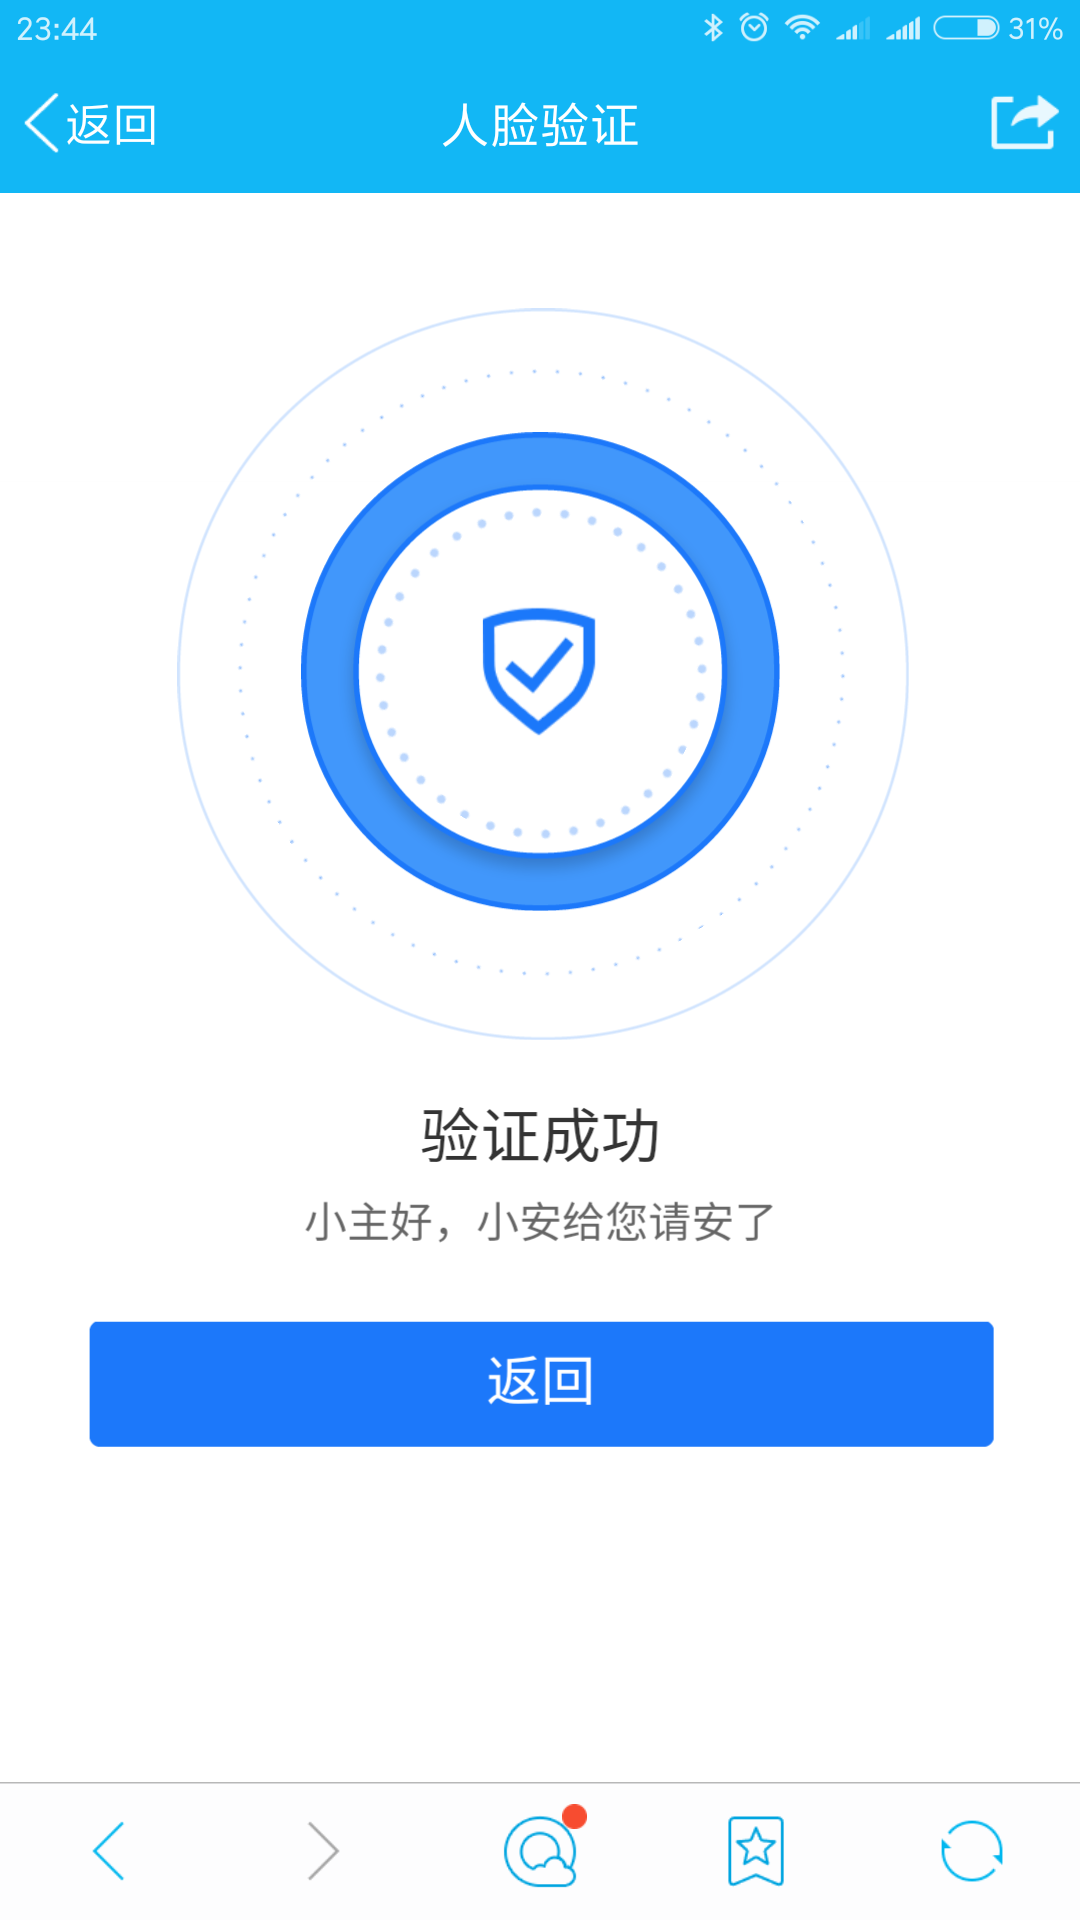 QQ第三代保护"人脸验证"，QQ改密，只需刷脸